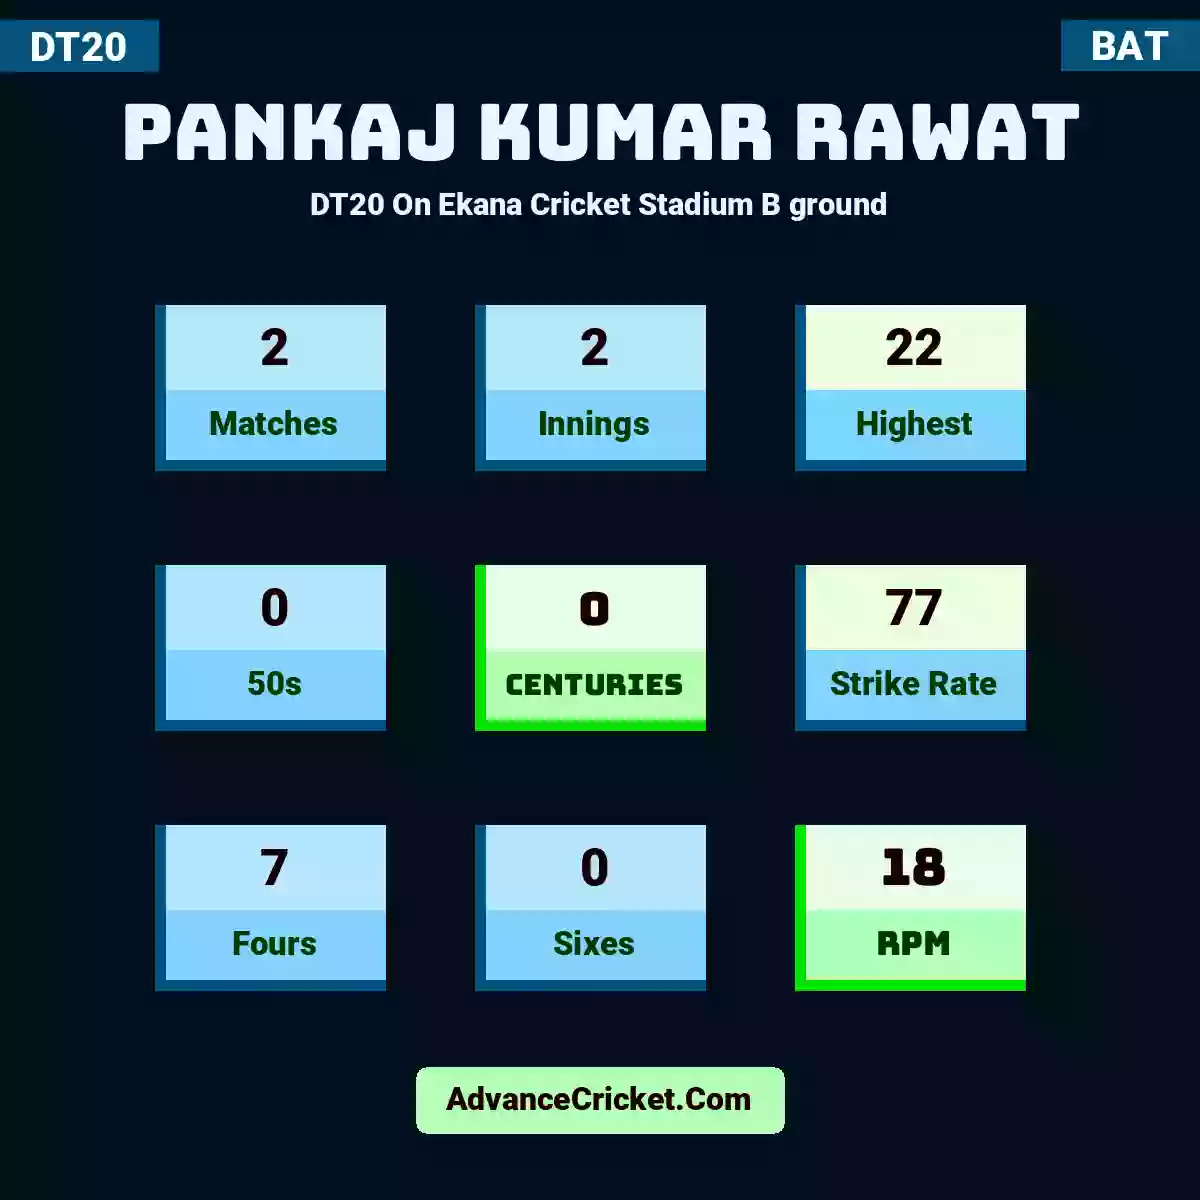 Pankaj Kumar Rawat DT20  On Ekana Cricket Stadium B ground, Pankaj Kumar Rawat played 2 matches, scored 22 runs as highest, 0 half-centuries, and 0 centuries, with a strike rate of 77. P.Rawat hit 7 fours and 0 sixes, with an RPM of 18.